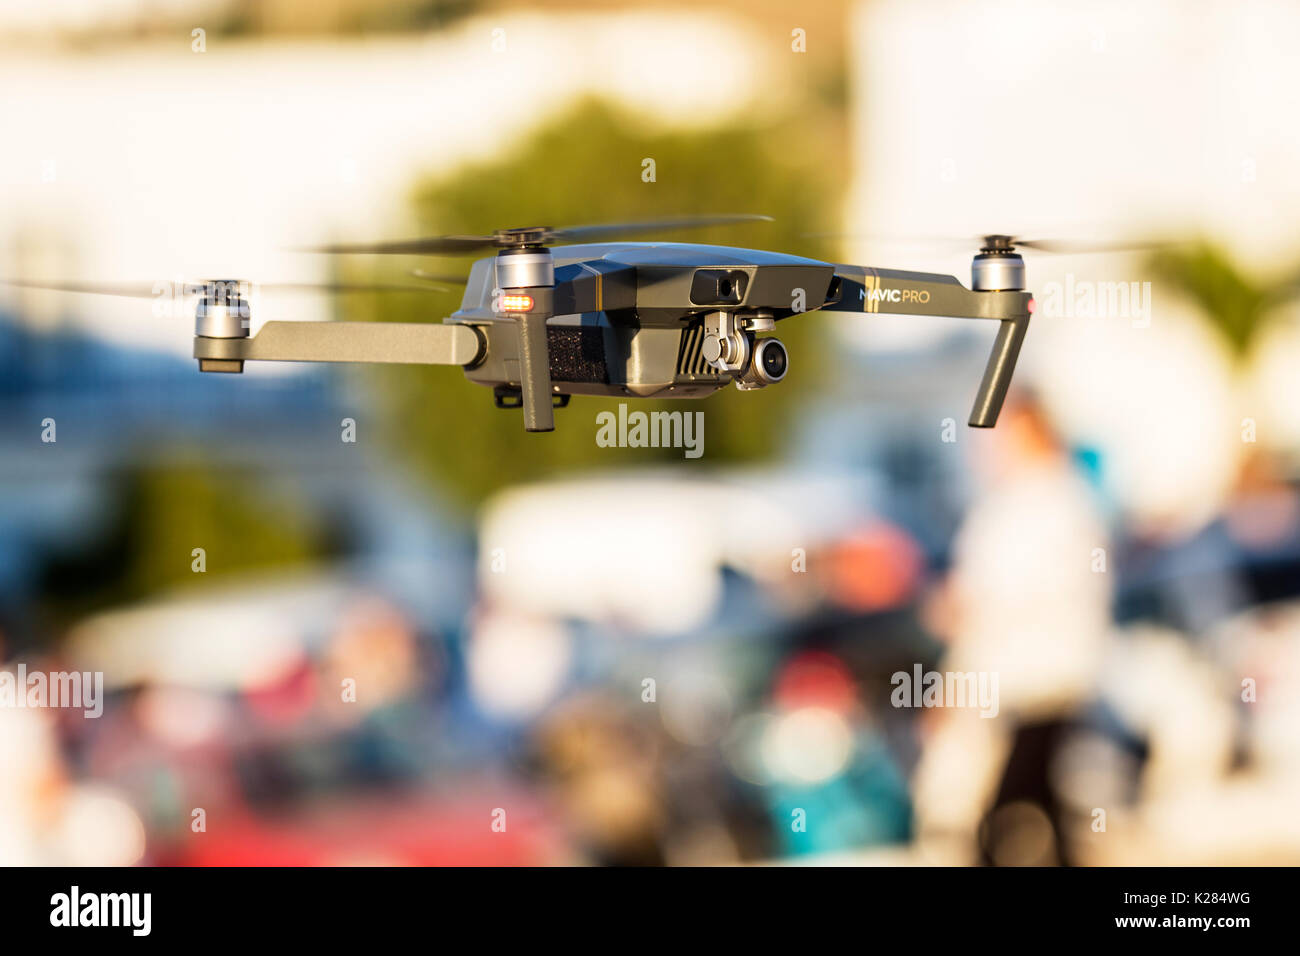 Mavic Pro quadcopter drone volando sobre la gente. Foto de stock